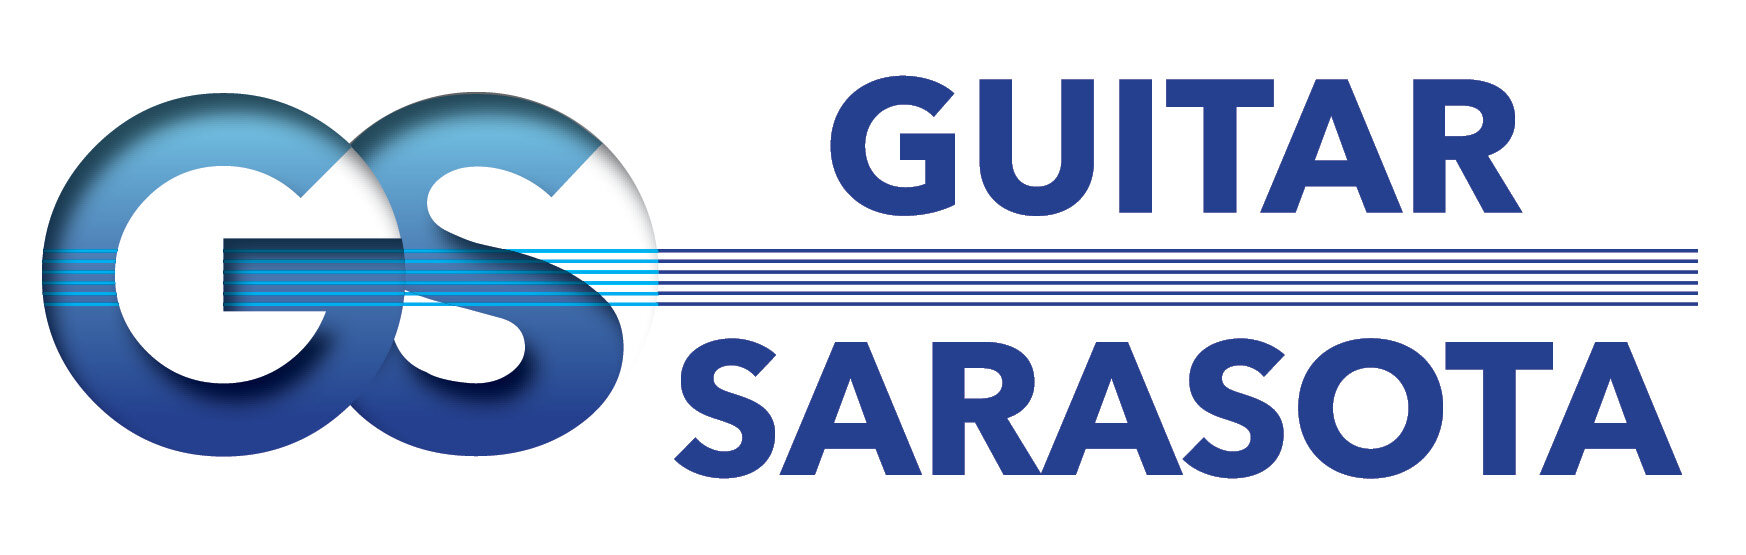 Guitar Sarasota logo .jpg